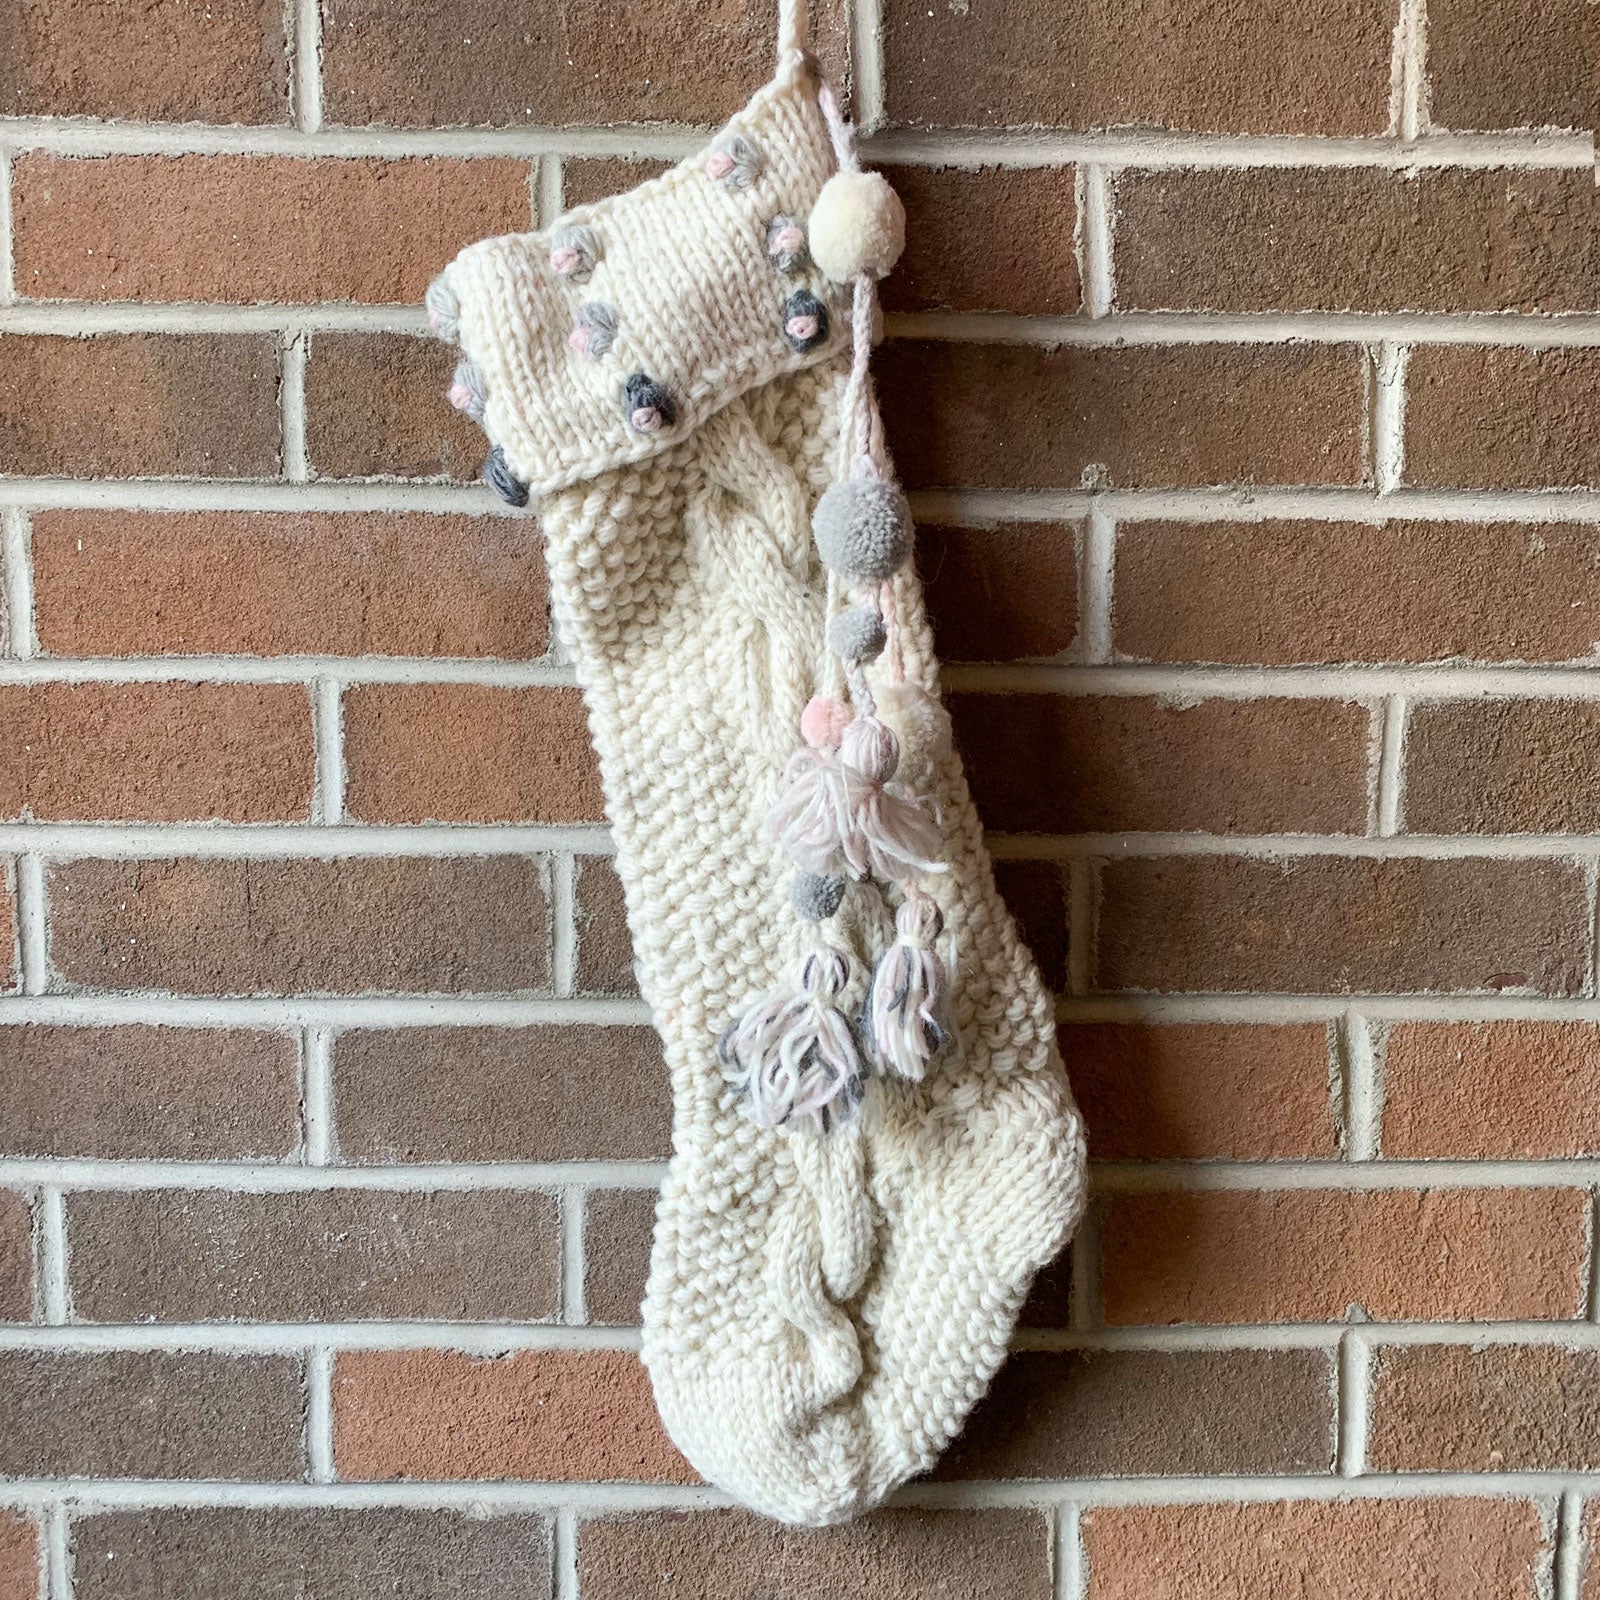 Hand Knit Stocking